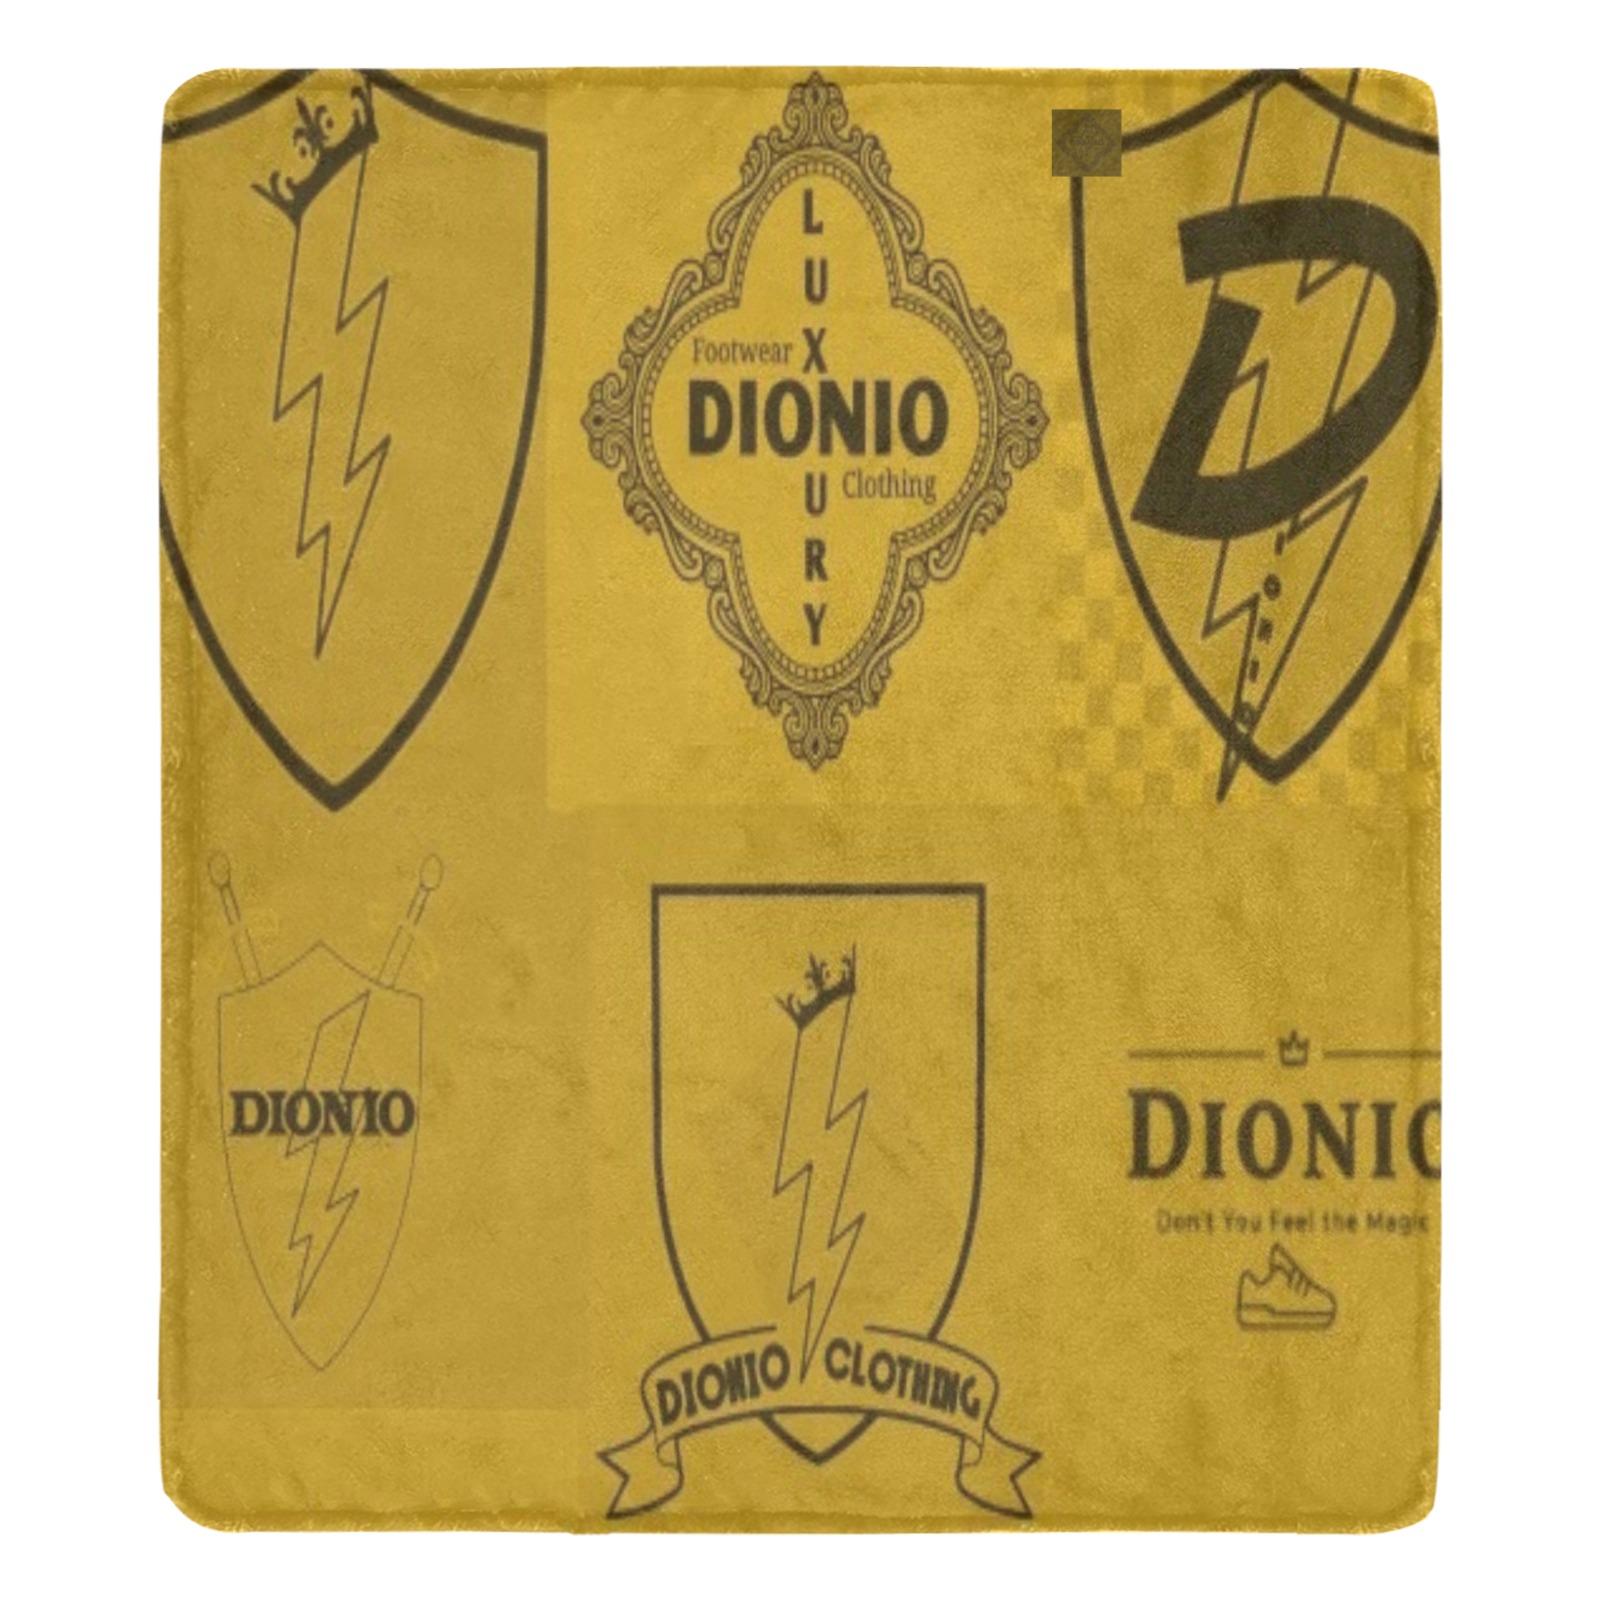 DIONIO - Dionio Badge Logos Ultra soft Micro Fleece Blanket 70 X 80 Ultra-Soft Micro Fleece Blanket 70''x80''